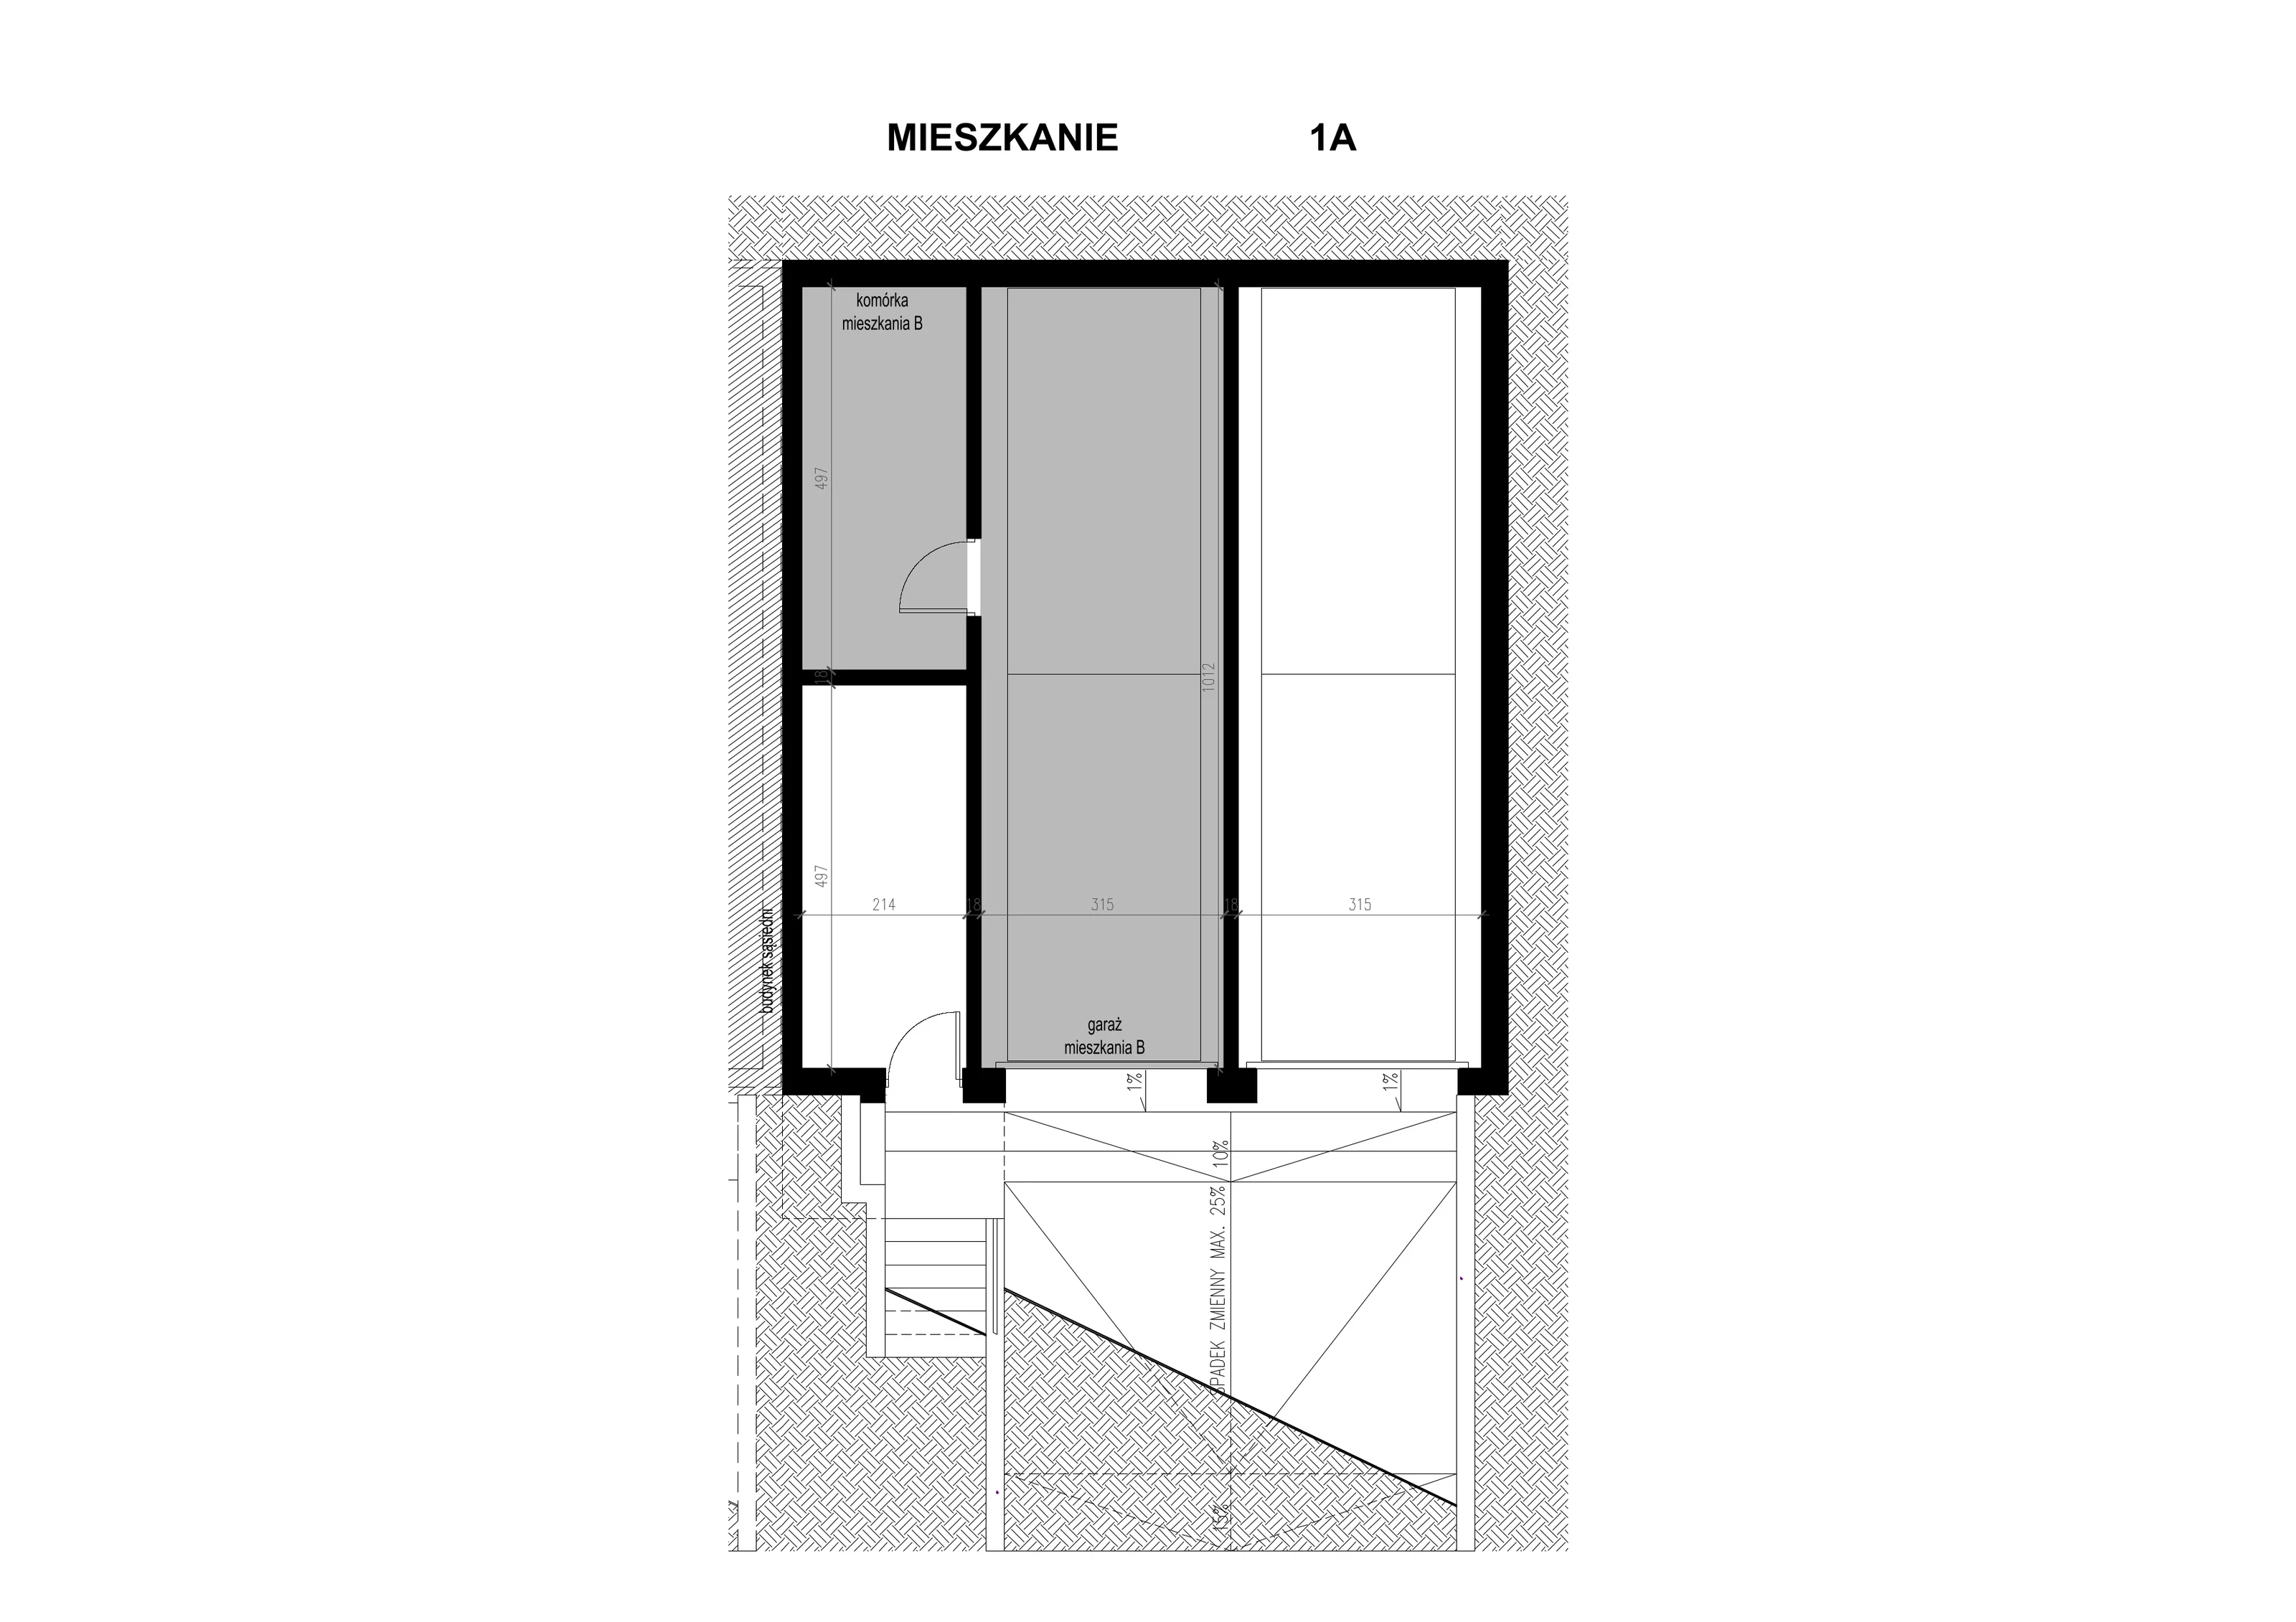 Apartament 80,15 m², parter, oferta nr 1.1A, Osiedle BO, Wrocław, Kowale, ul. Bociana